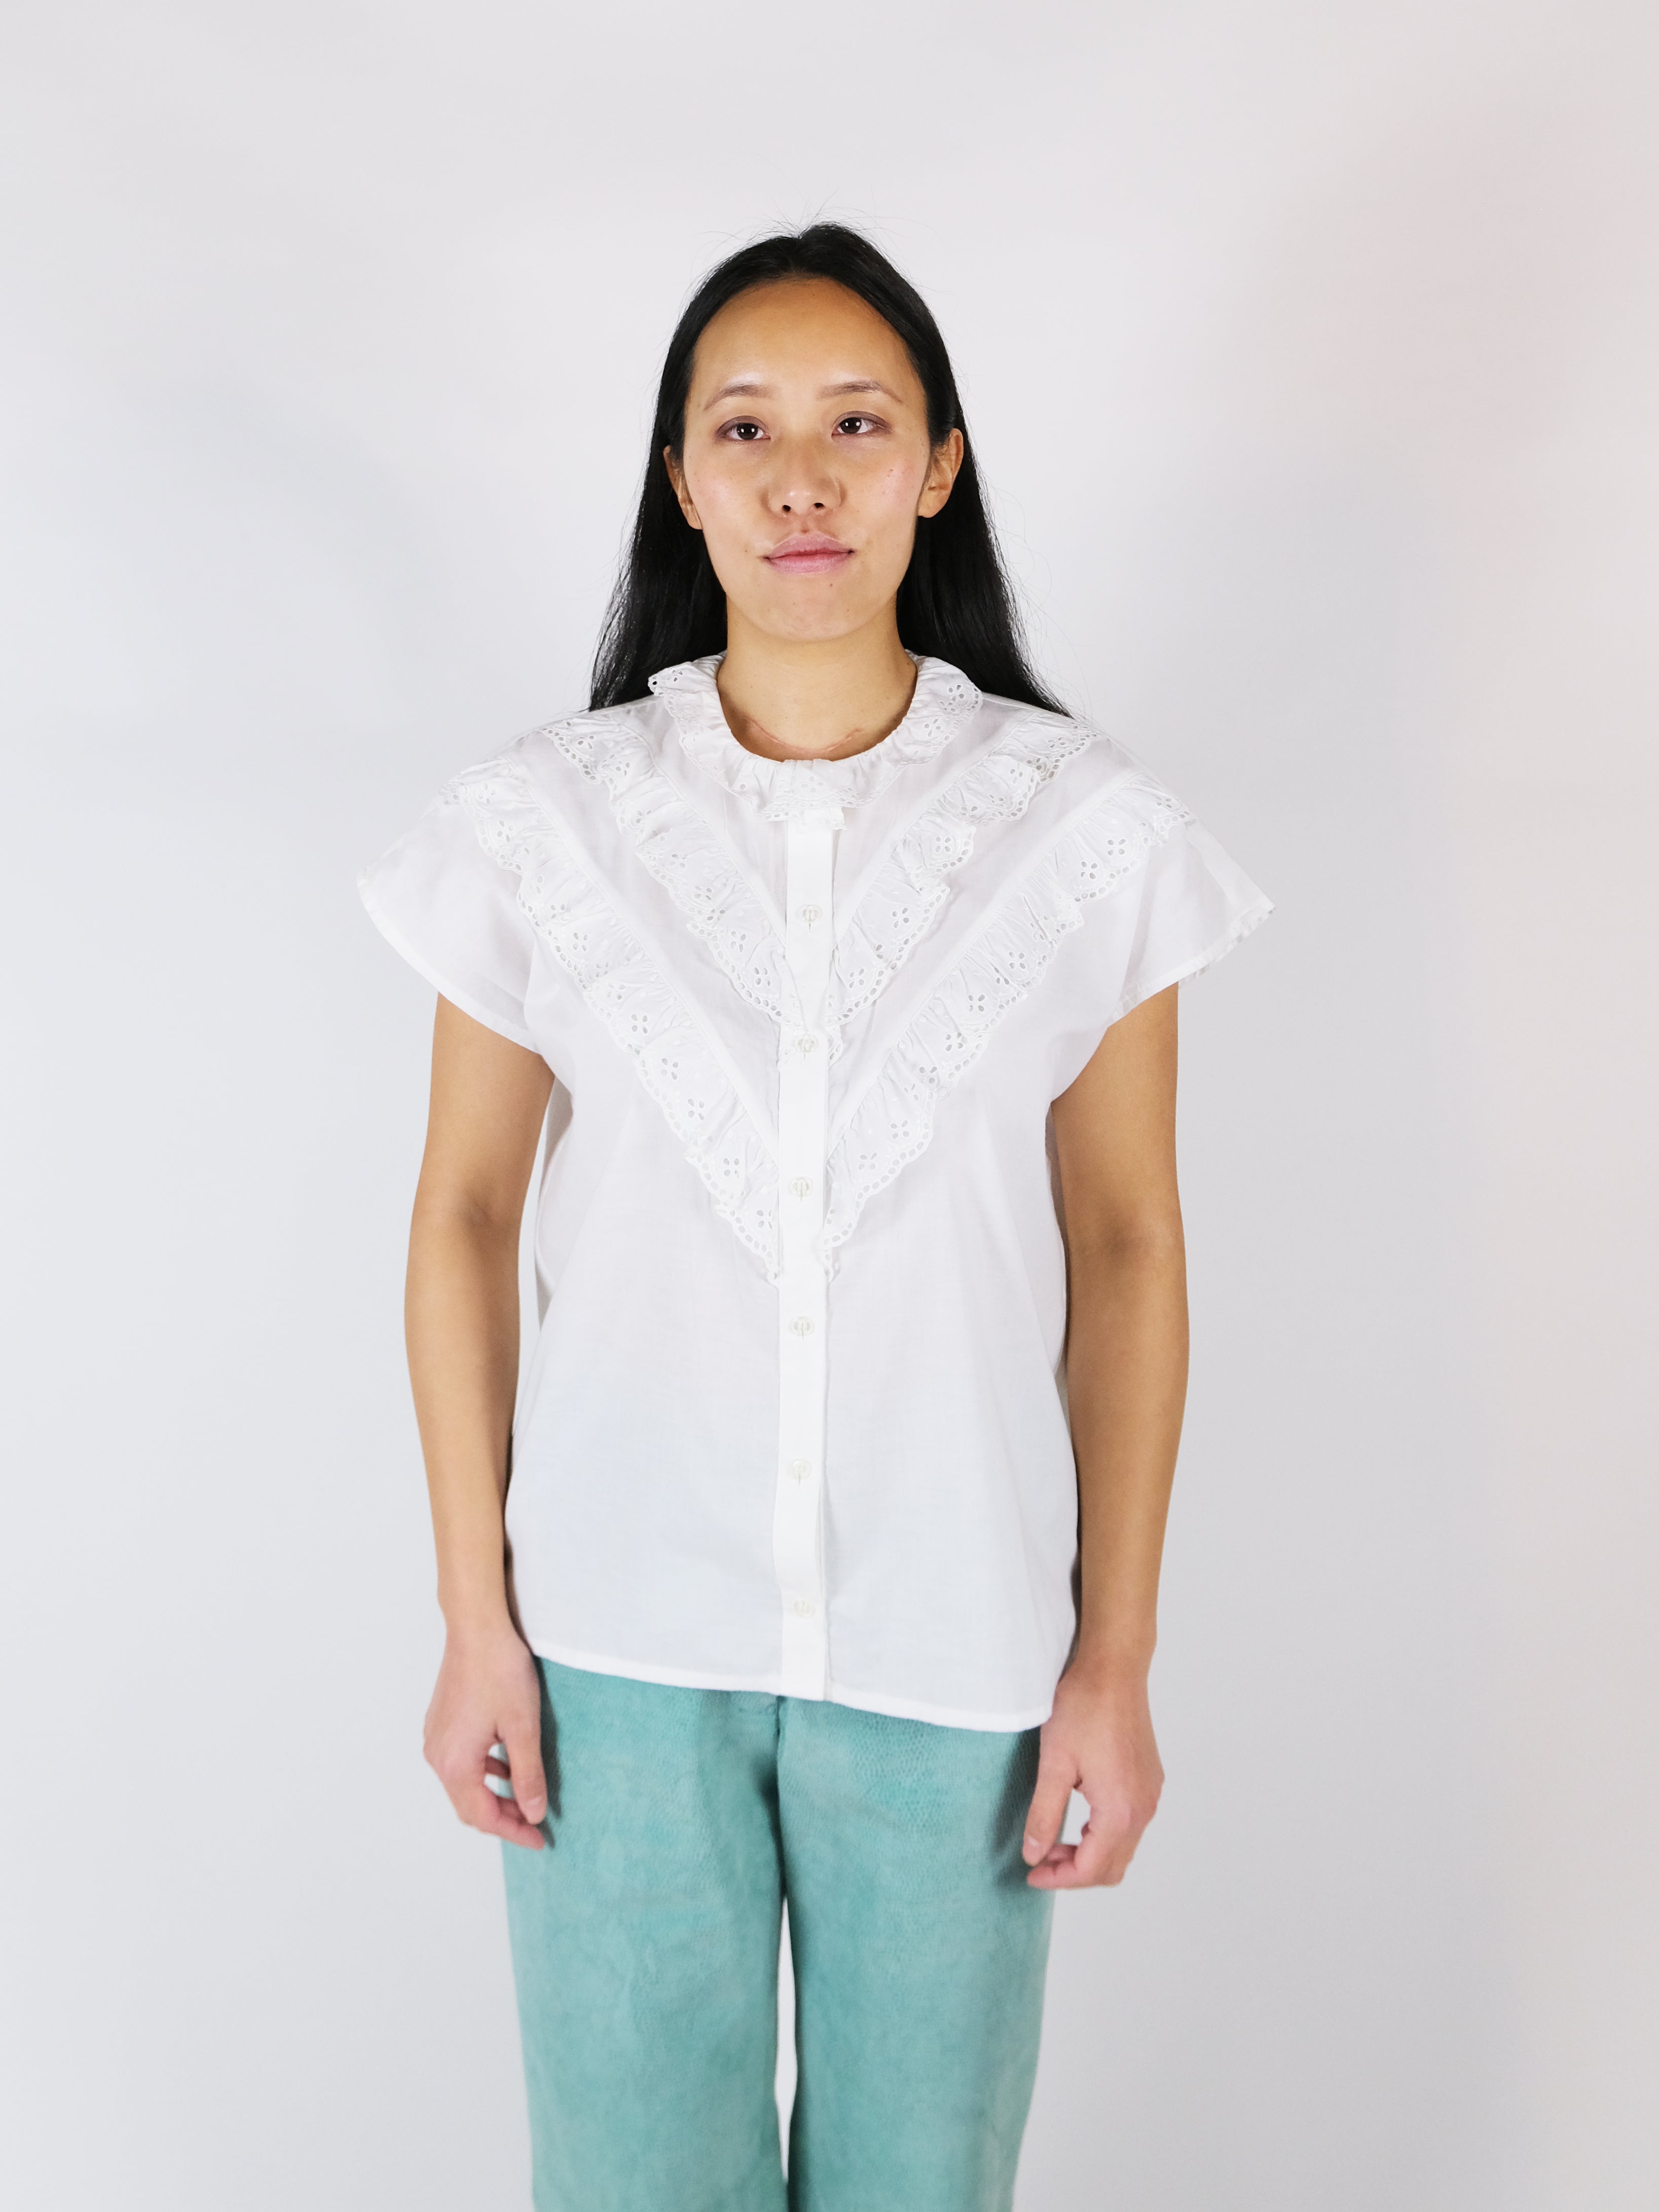 Collar blouse ruffles white sleeveless